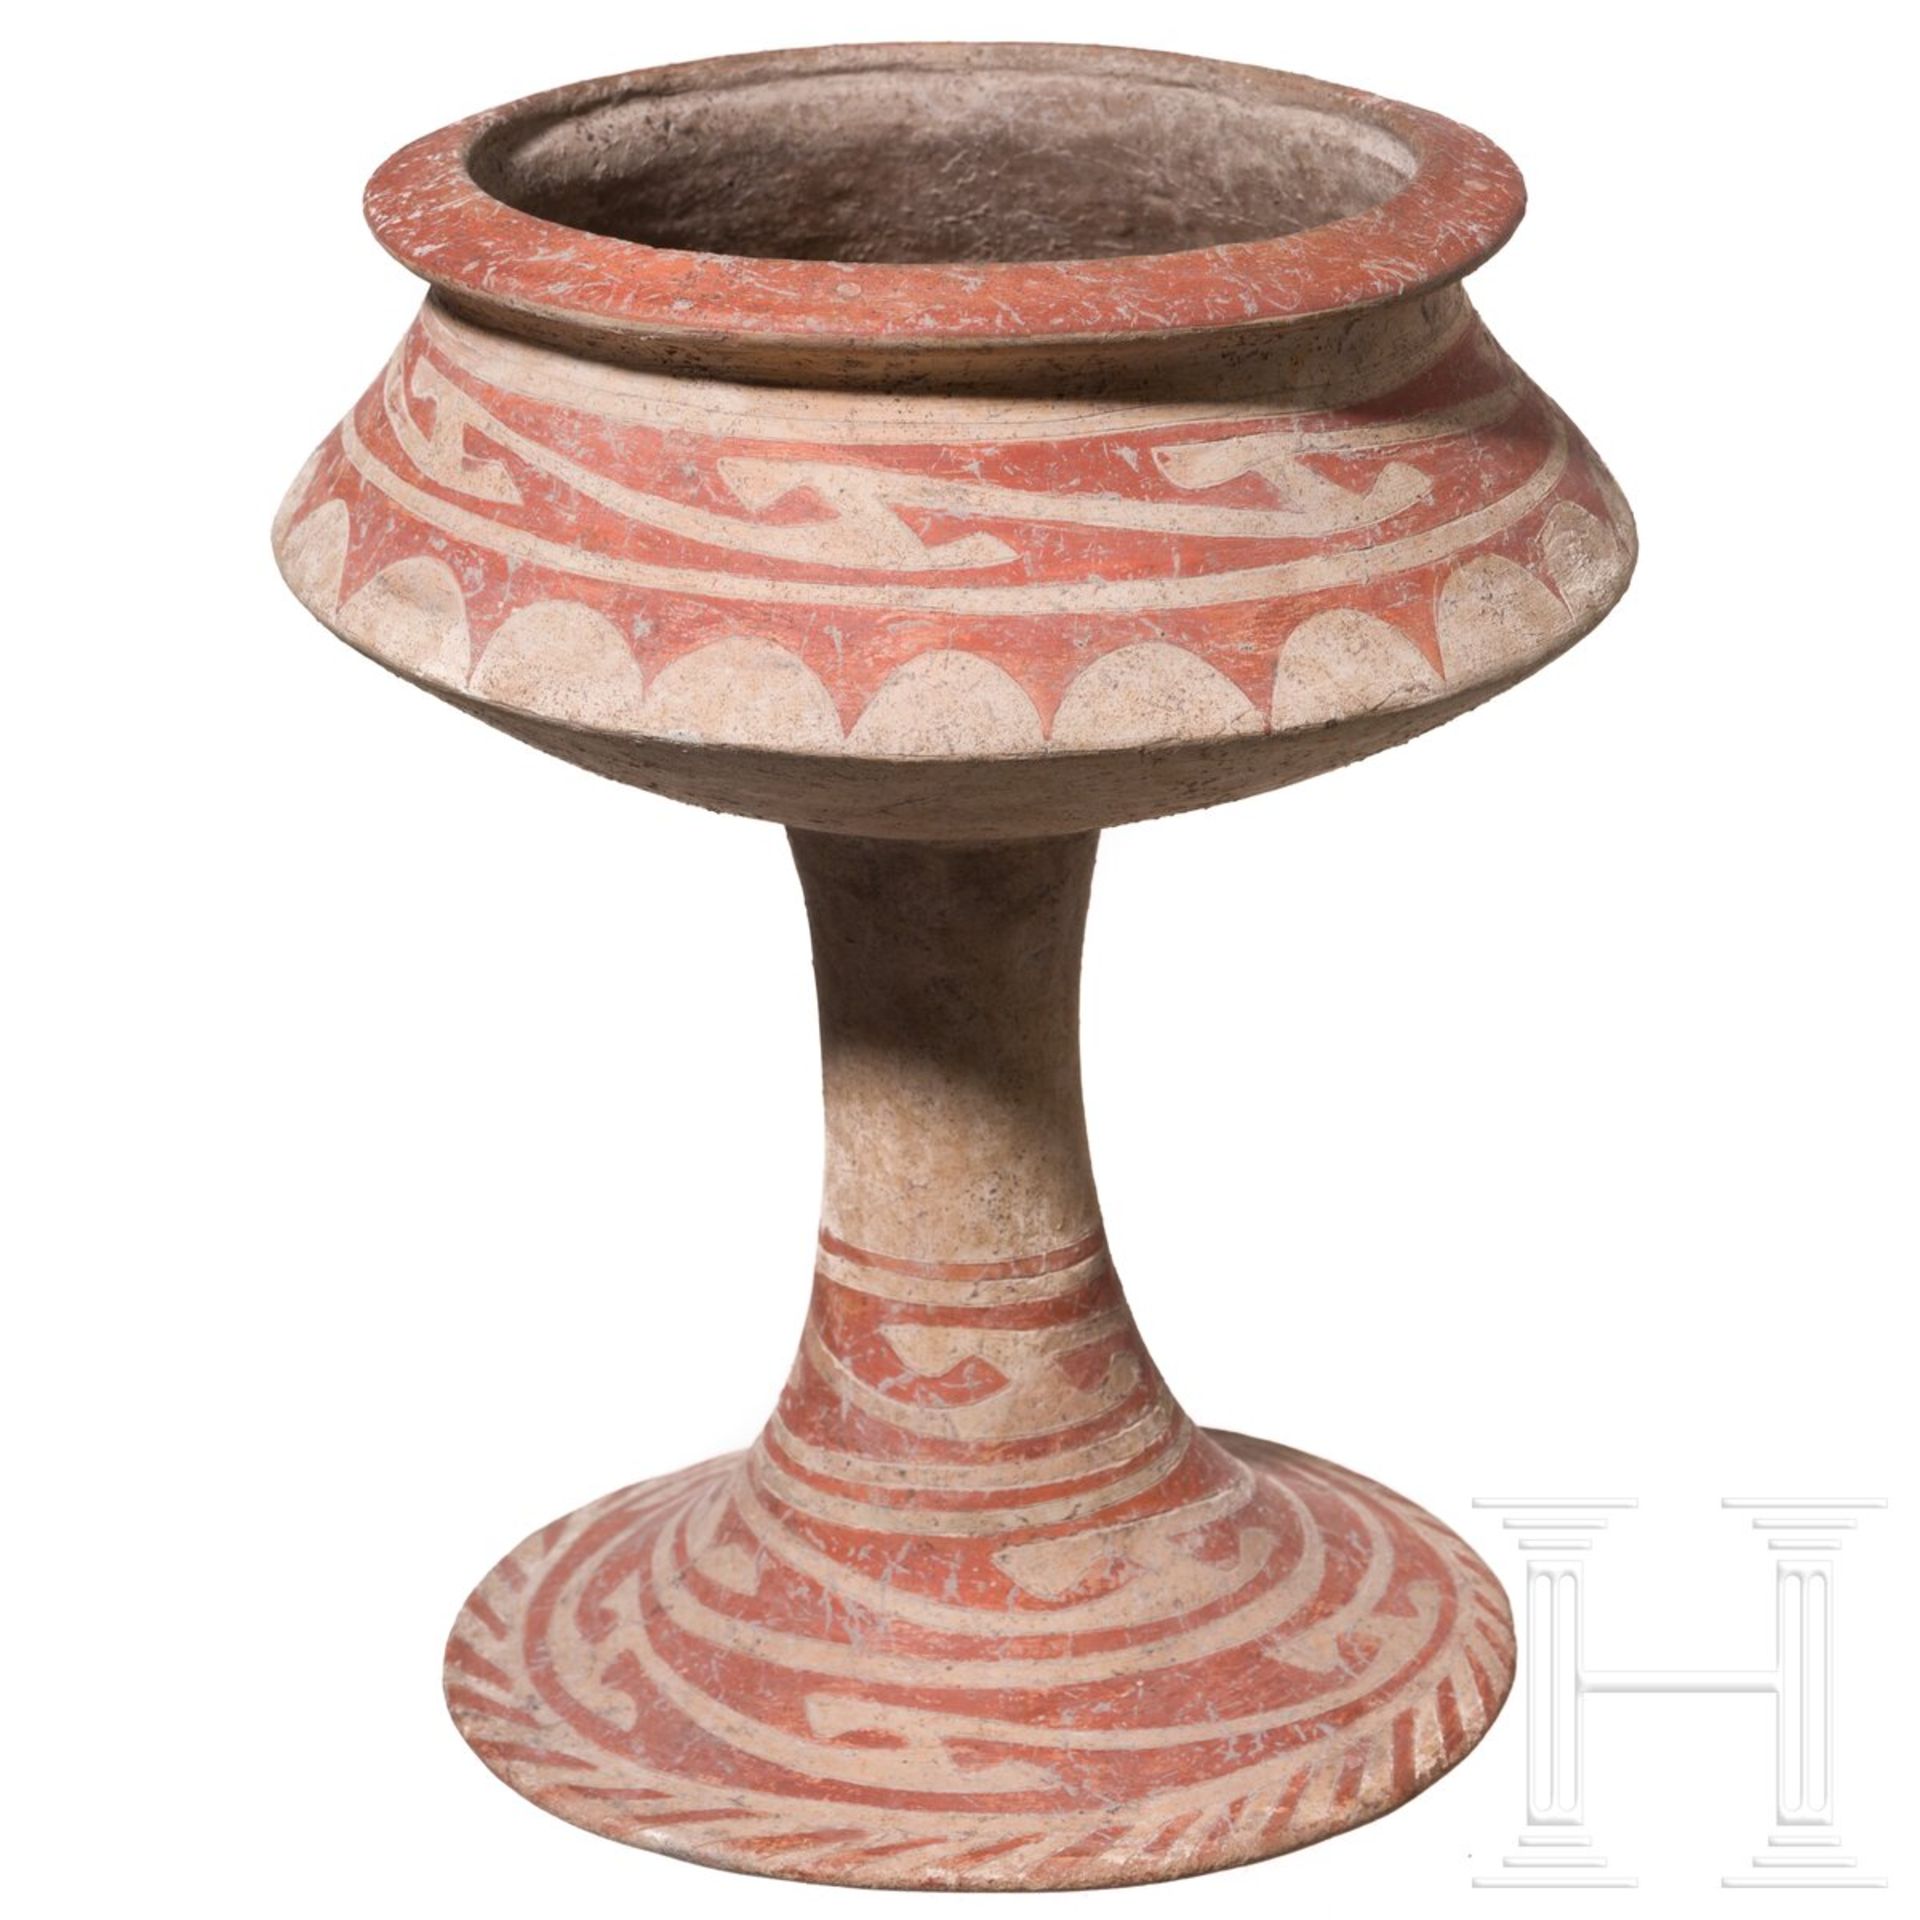 Große Vase, China, Yangshao-Kultur, 3000 - 2000 v. Chr.  - Bild 2 aus 5